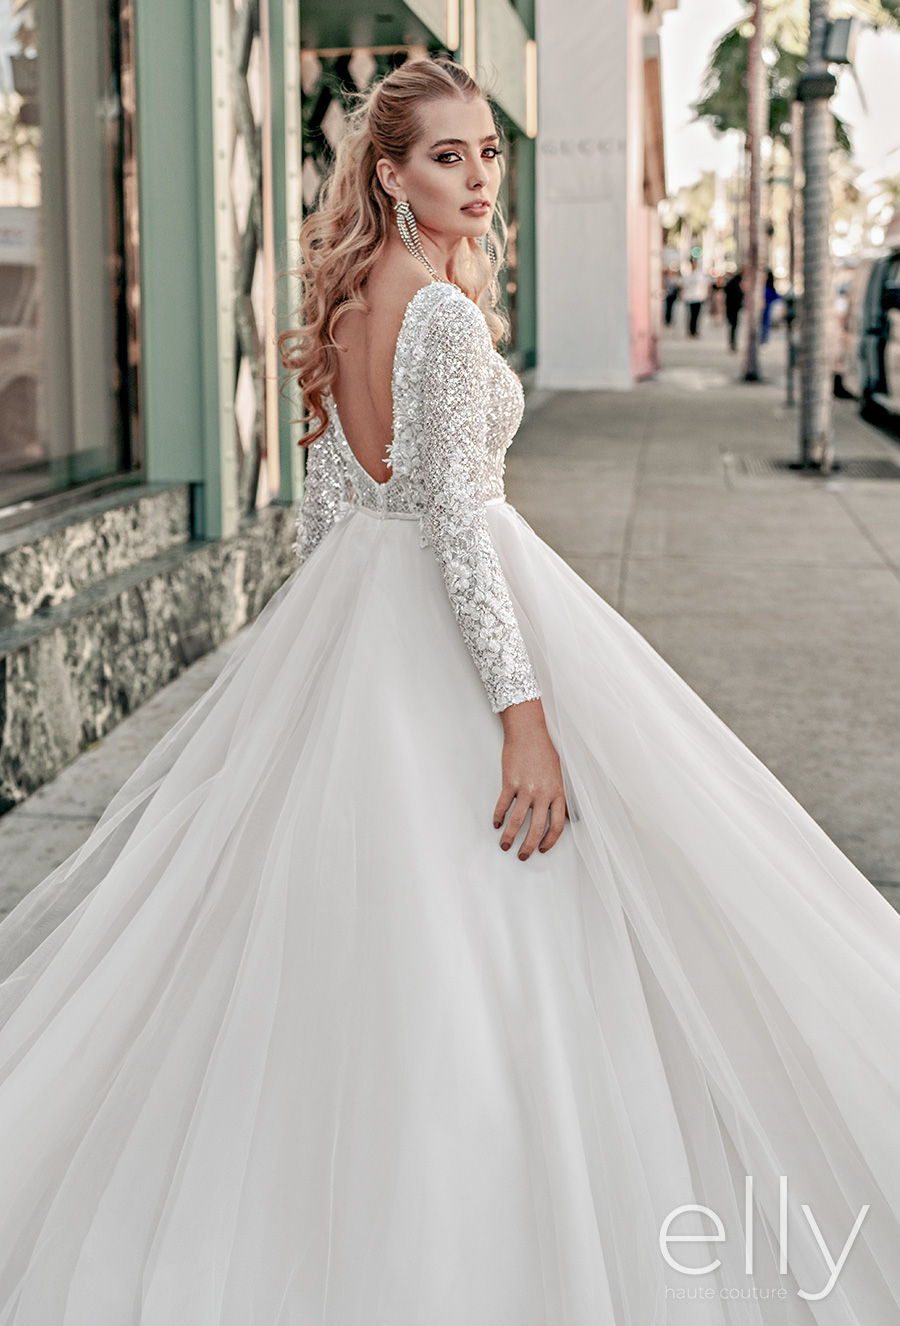 Elly Wedding Dresses — “Los Angeles”, “NYC” & “White